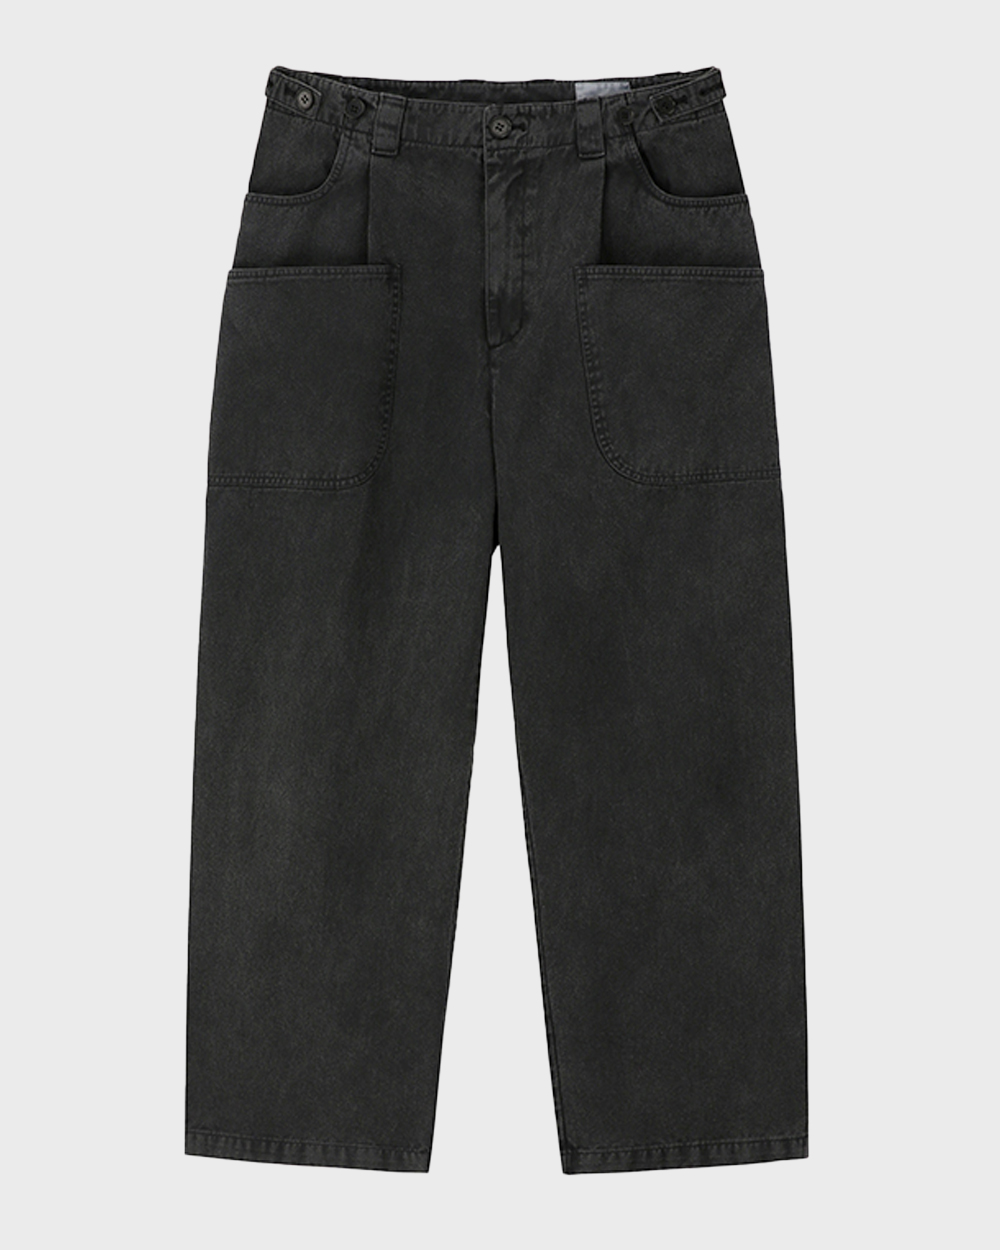 French Workwear Pants (Used Black)